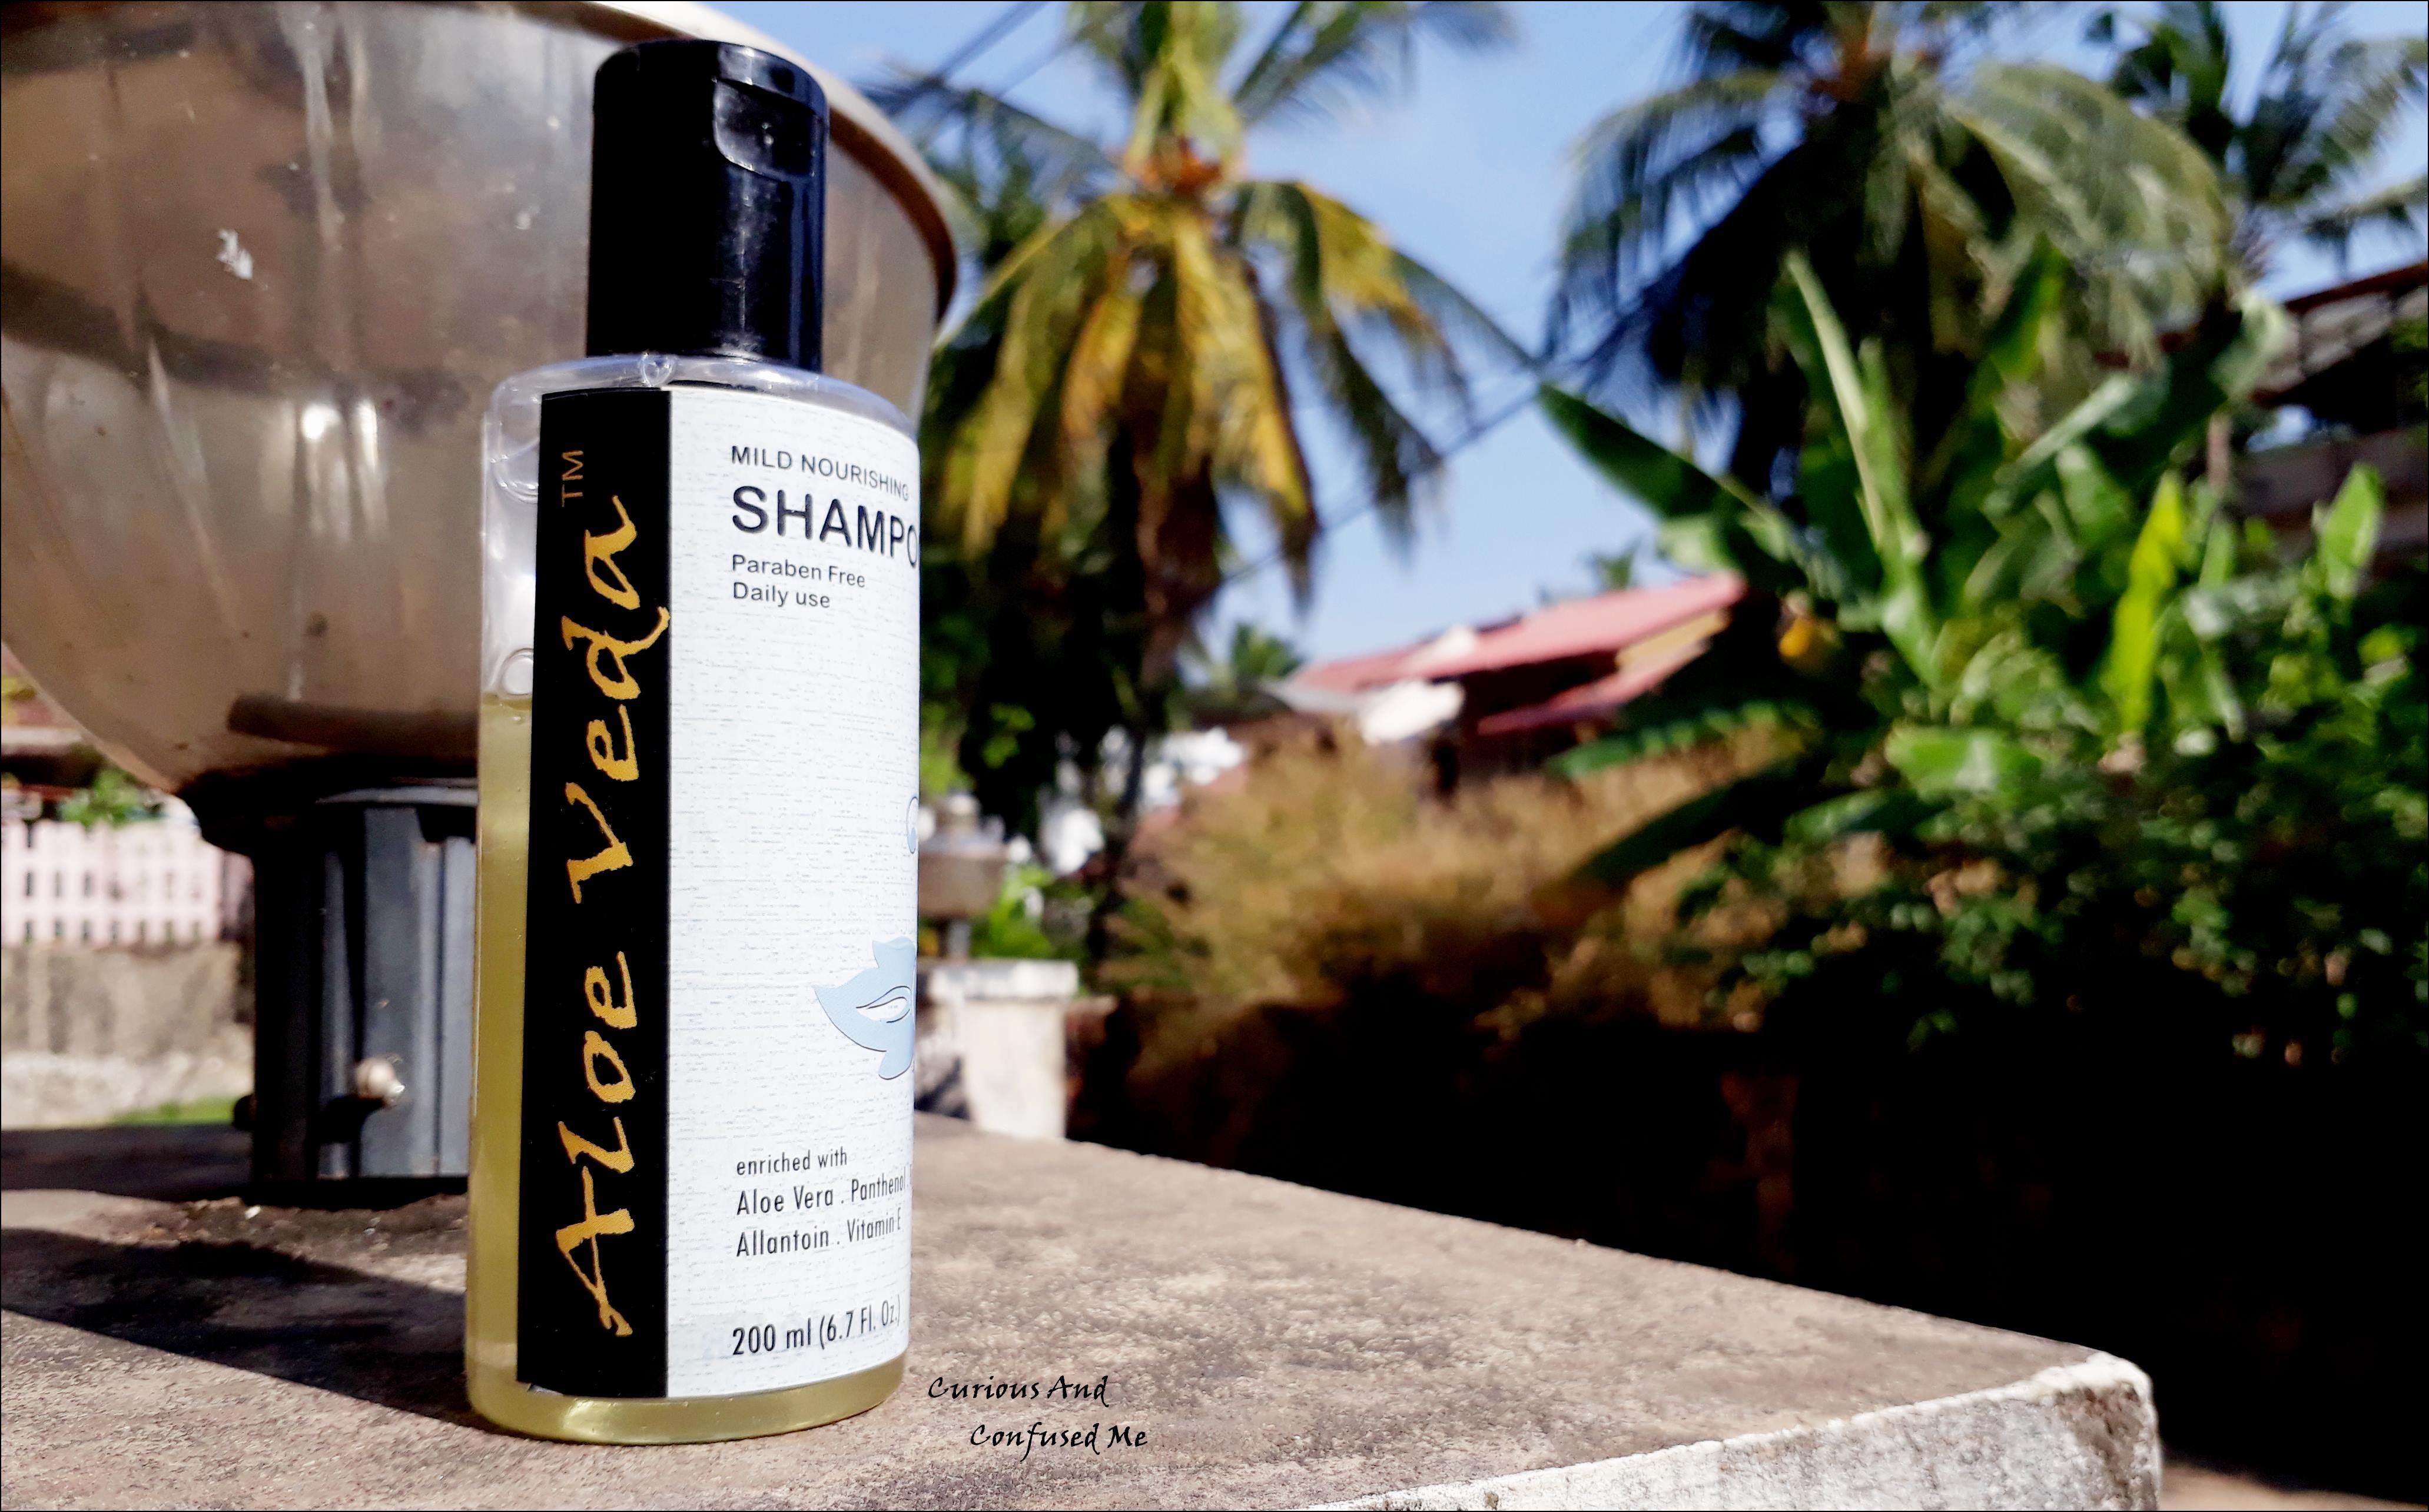 Aloe Veda Mild Nourishing Shampoo review